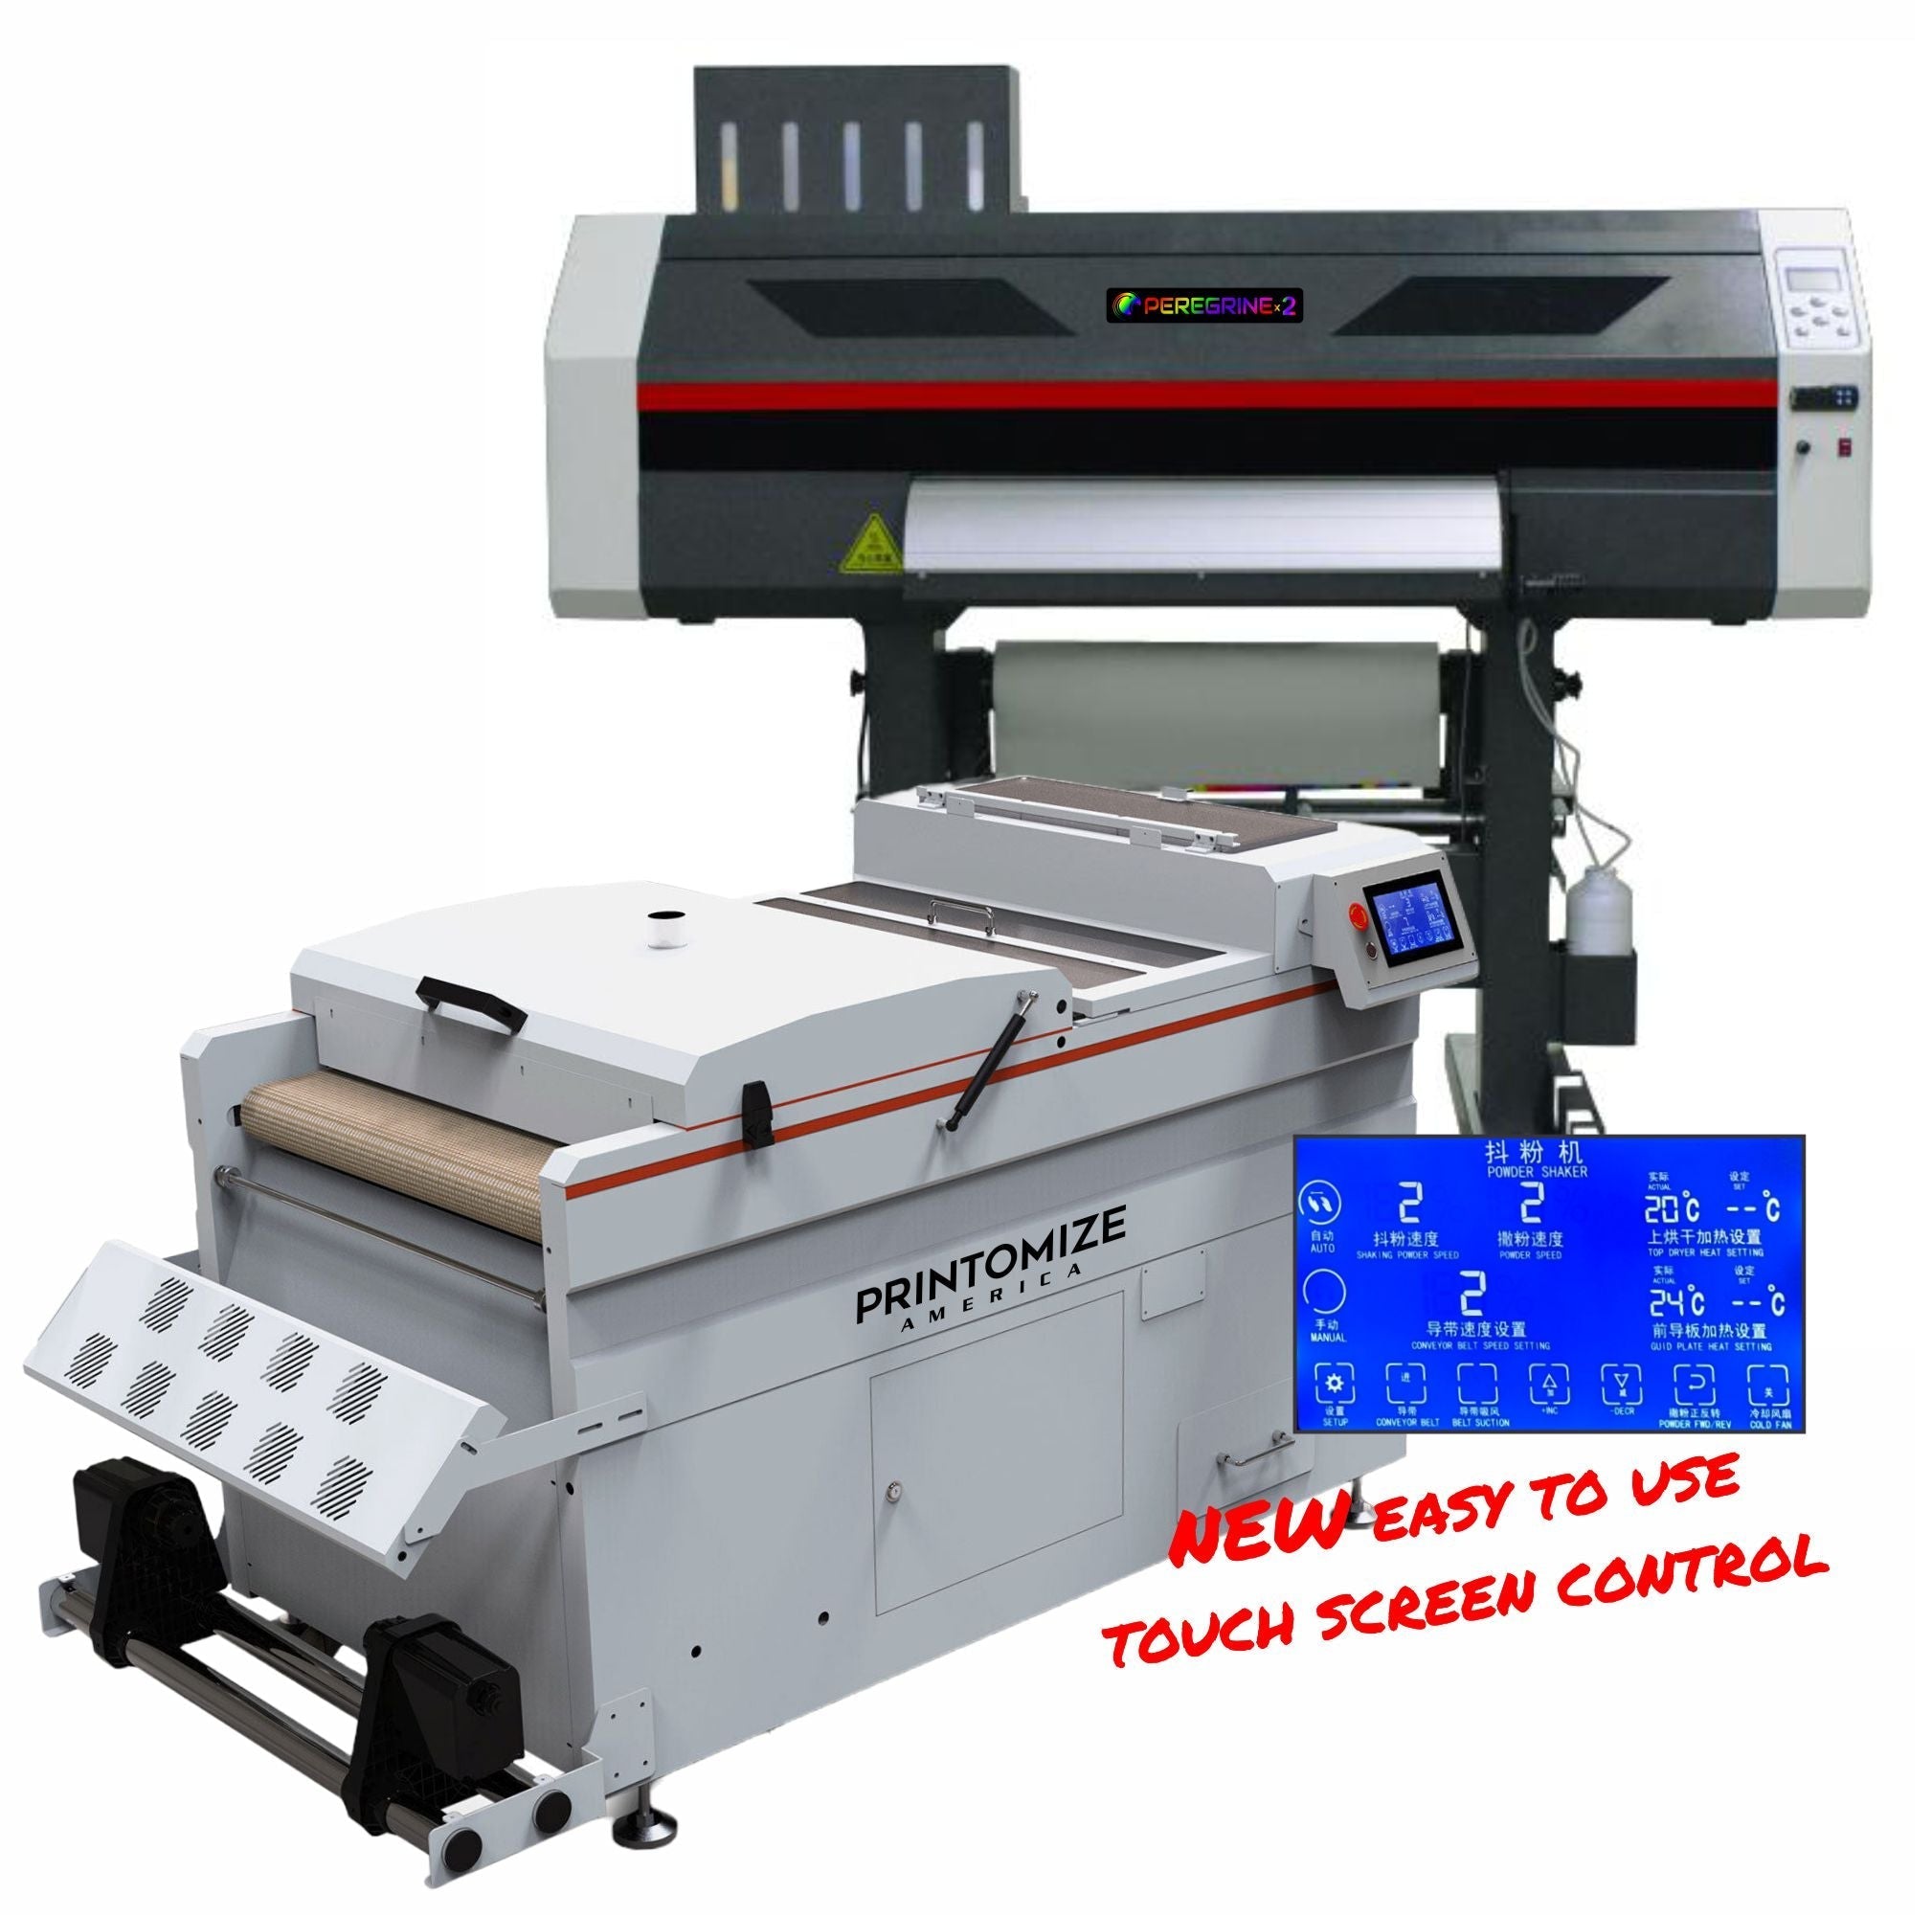 Commercial DTF Printer: Advanced Shaker & Dryer System